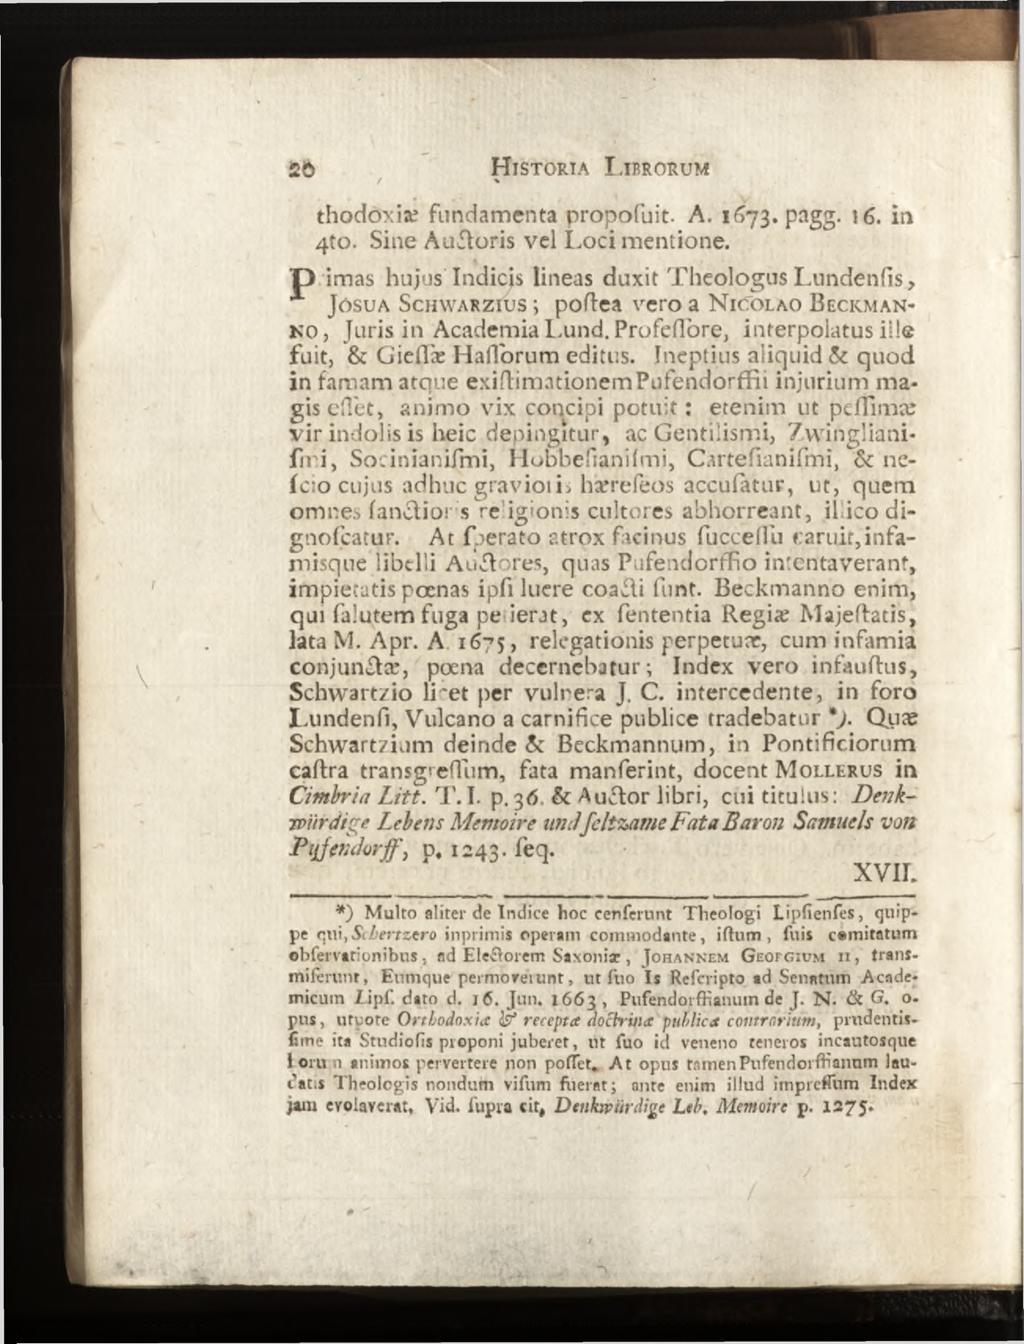 thodoxia? fundamenta propofuit. A. 1673. pagg. i6. in 4to. Sine Aufforis vel Loci mentione.